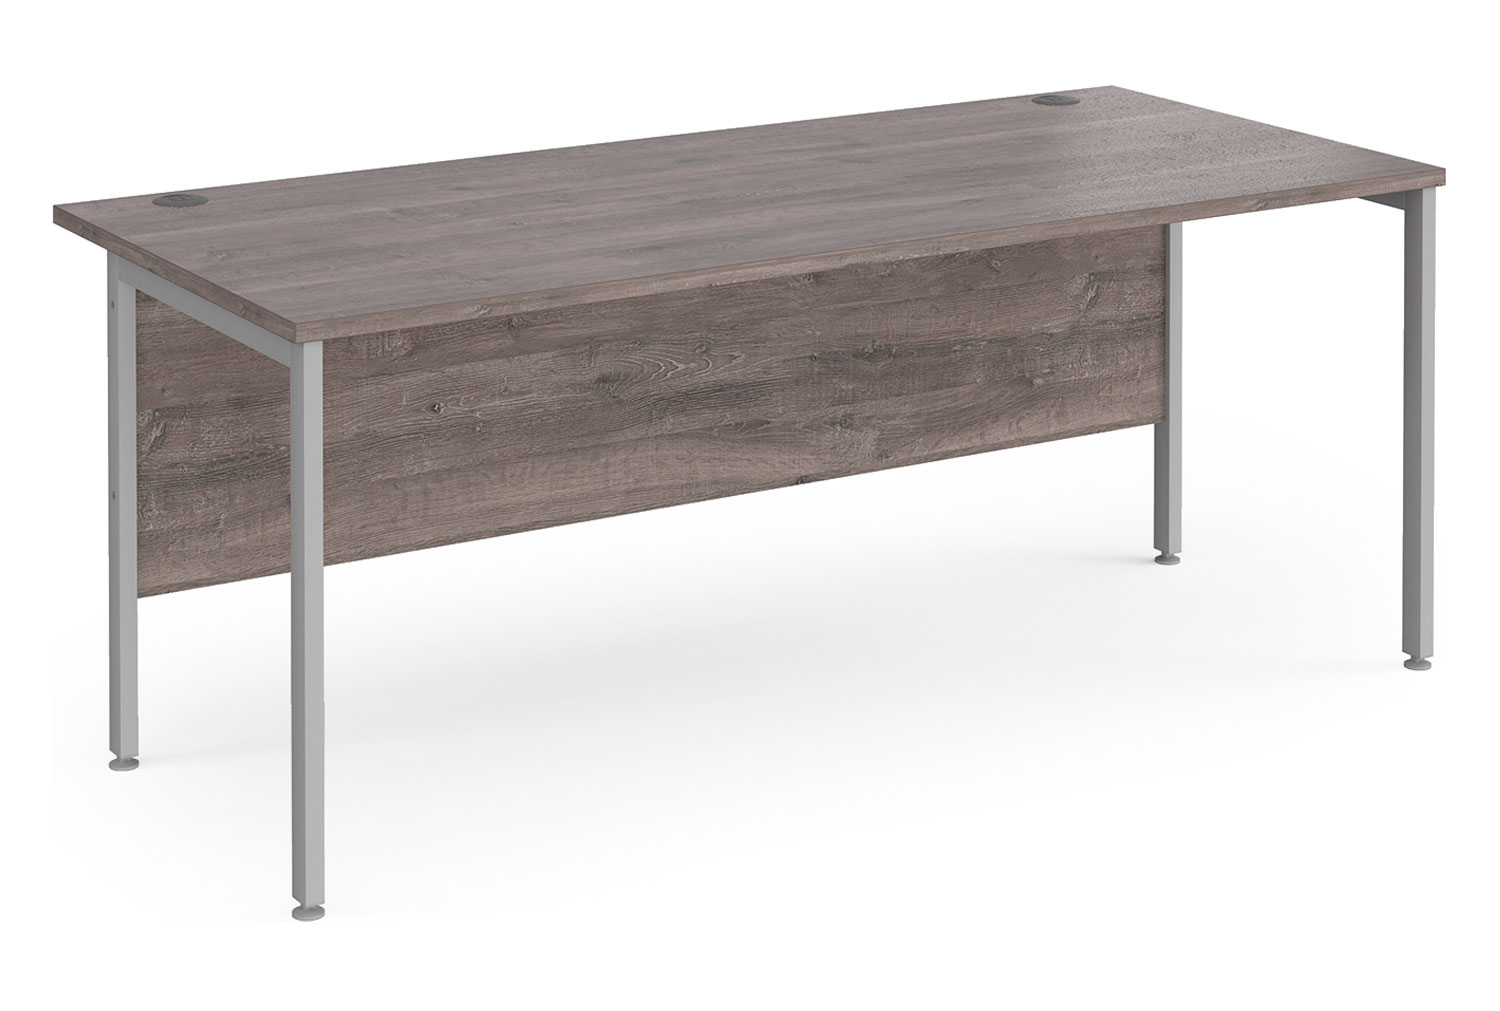 Value Line Deluxe H-Leg Rectangular Office Desk (Silver Legs), 180wx80dx73h (cm), Grey Oak